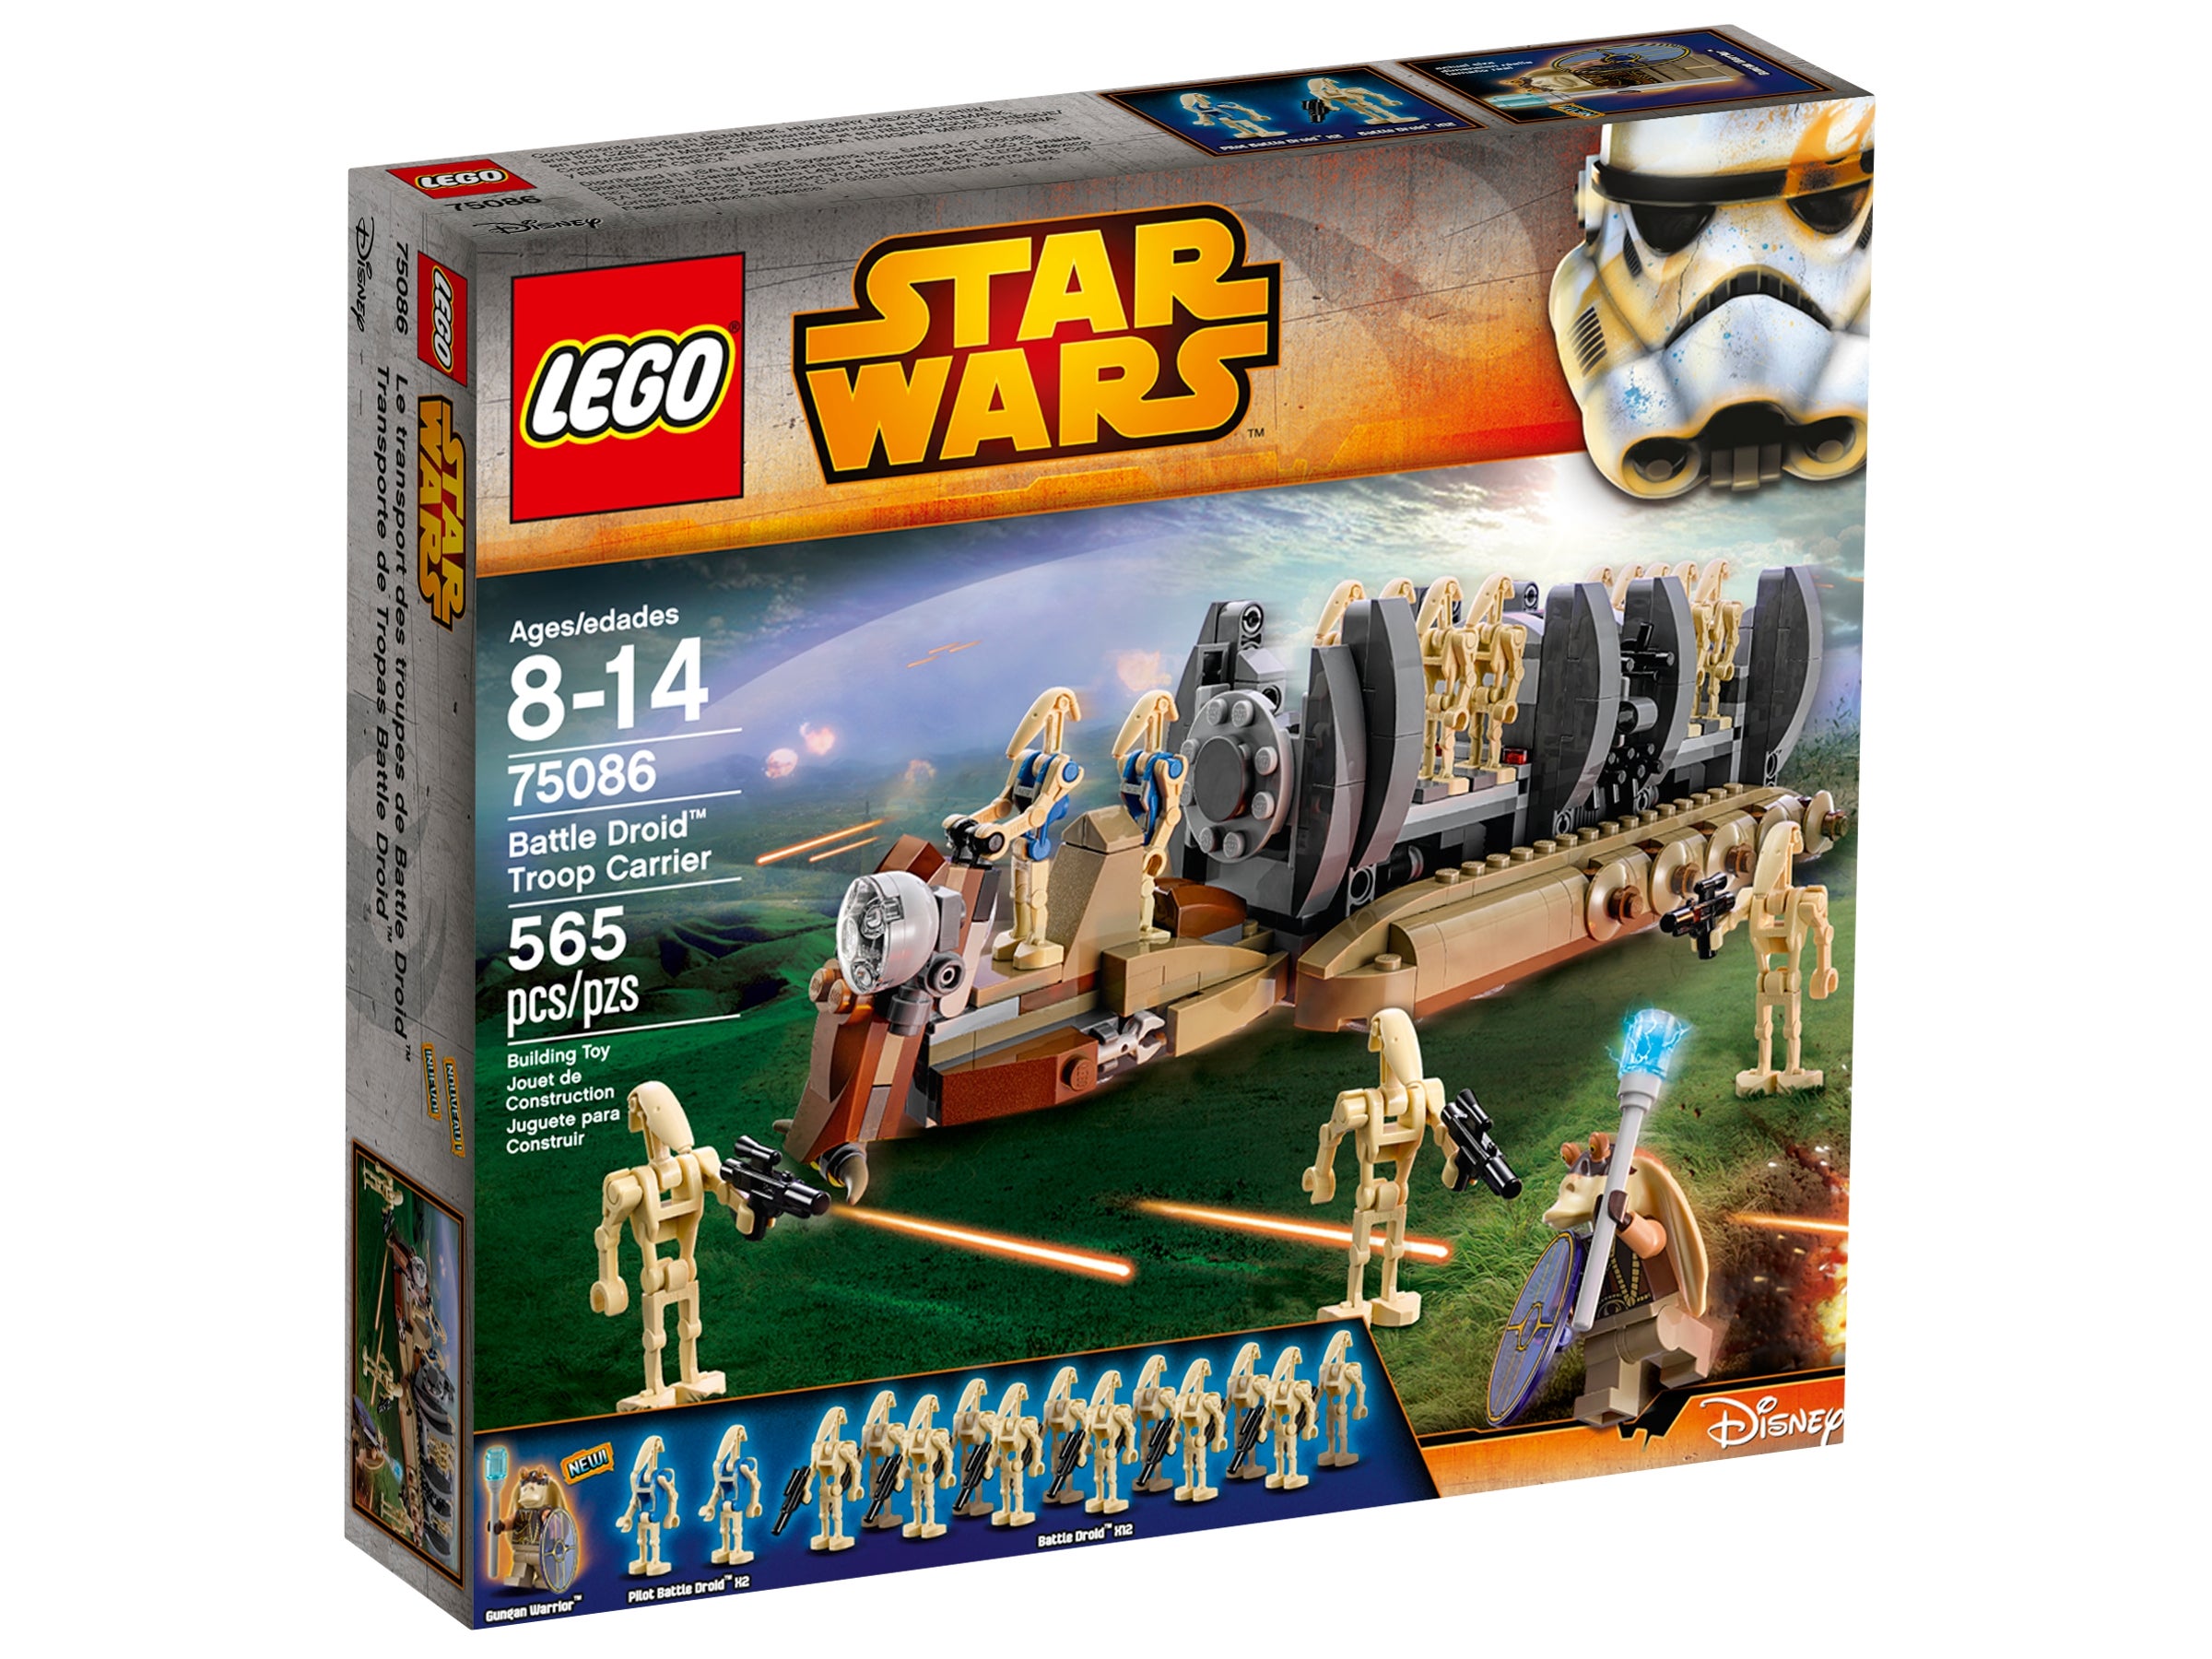 Star wars battle droid army x 10 custom minifigure lego mini figure minifig